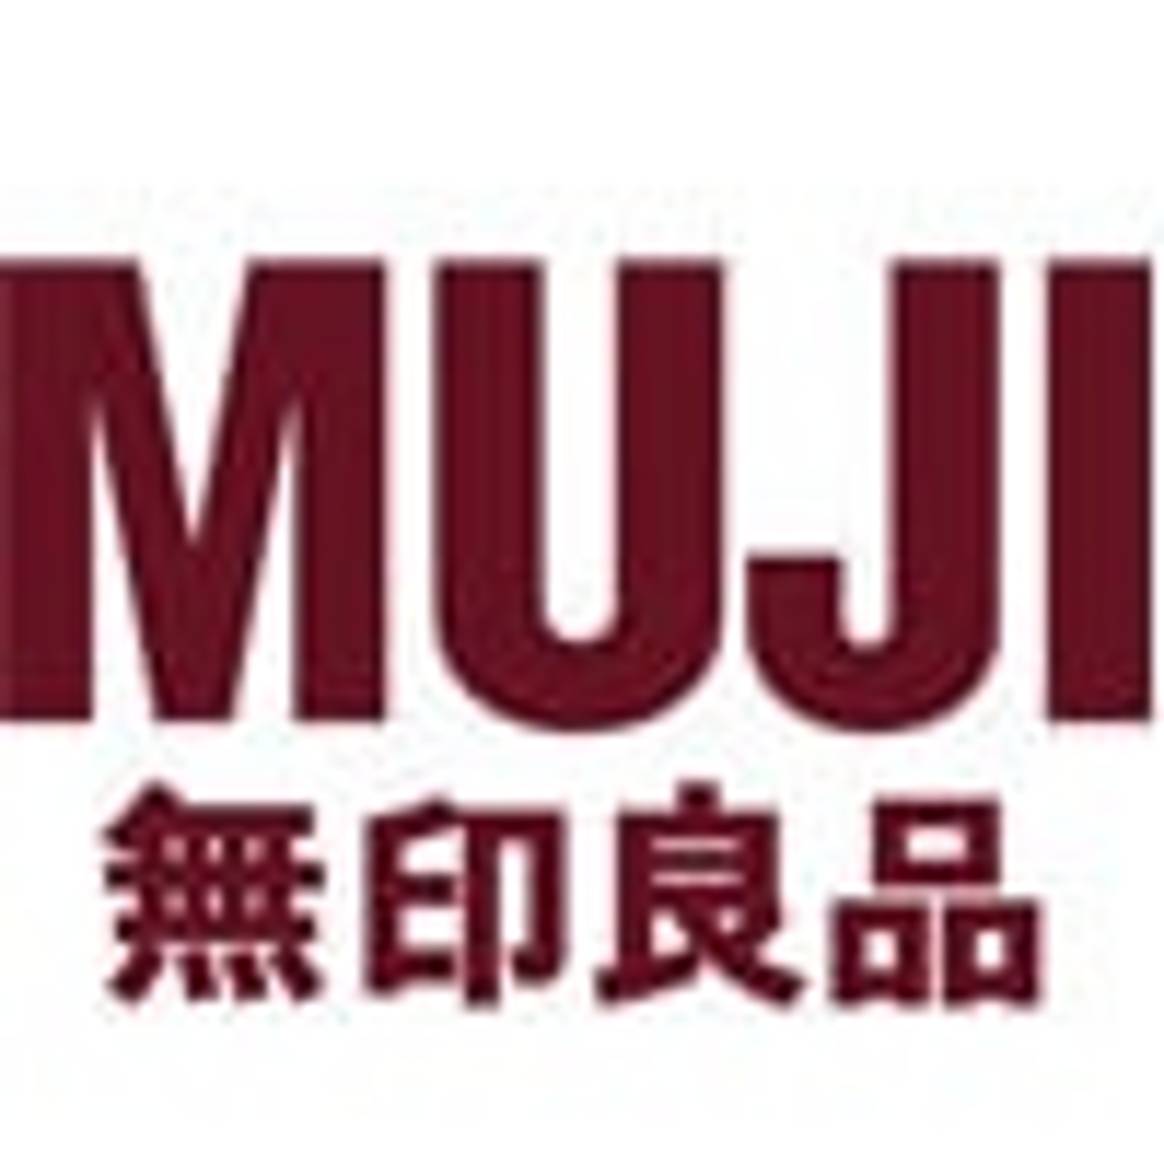 Muji Store Berlin: Eröffnung noch in dieser Woche